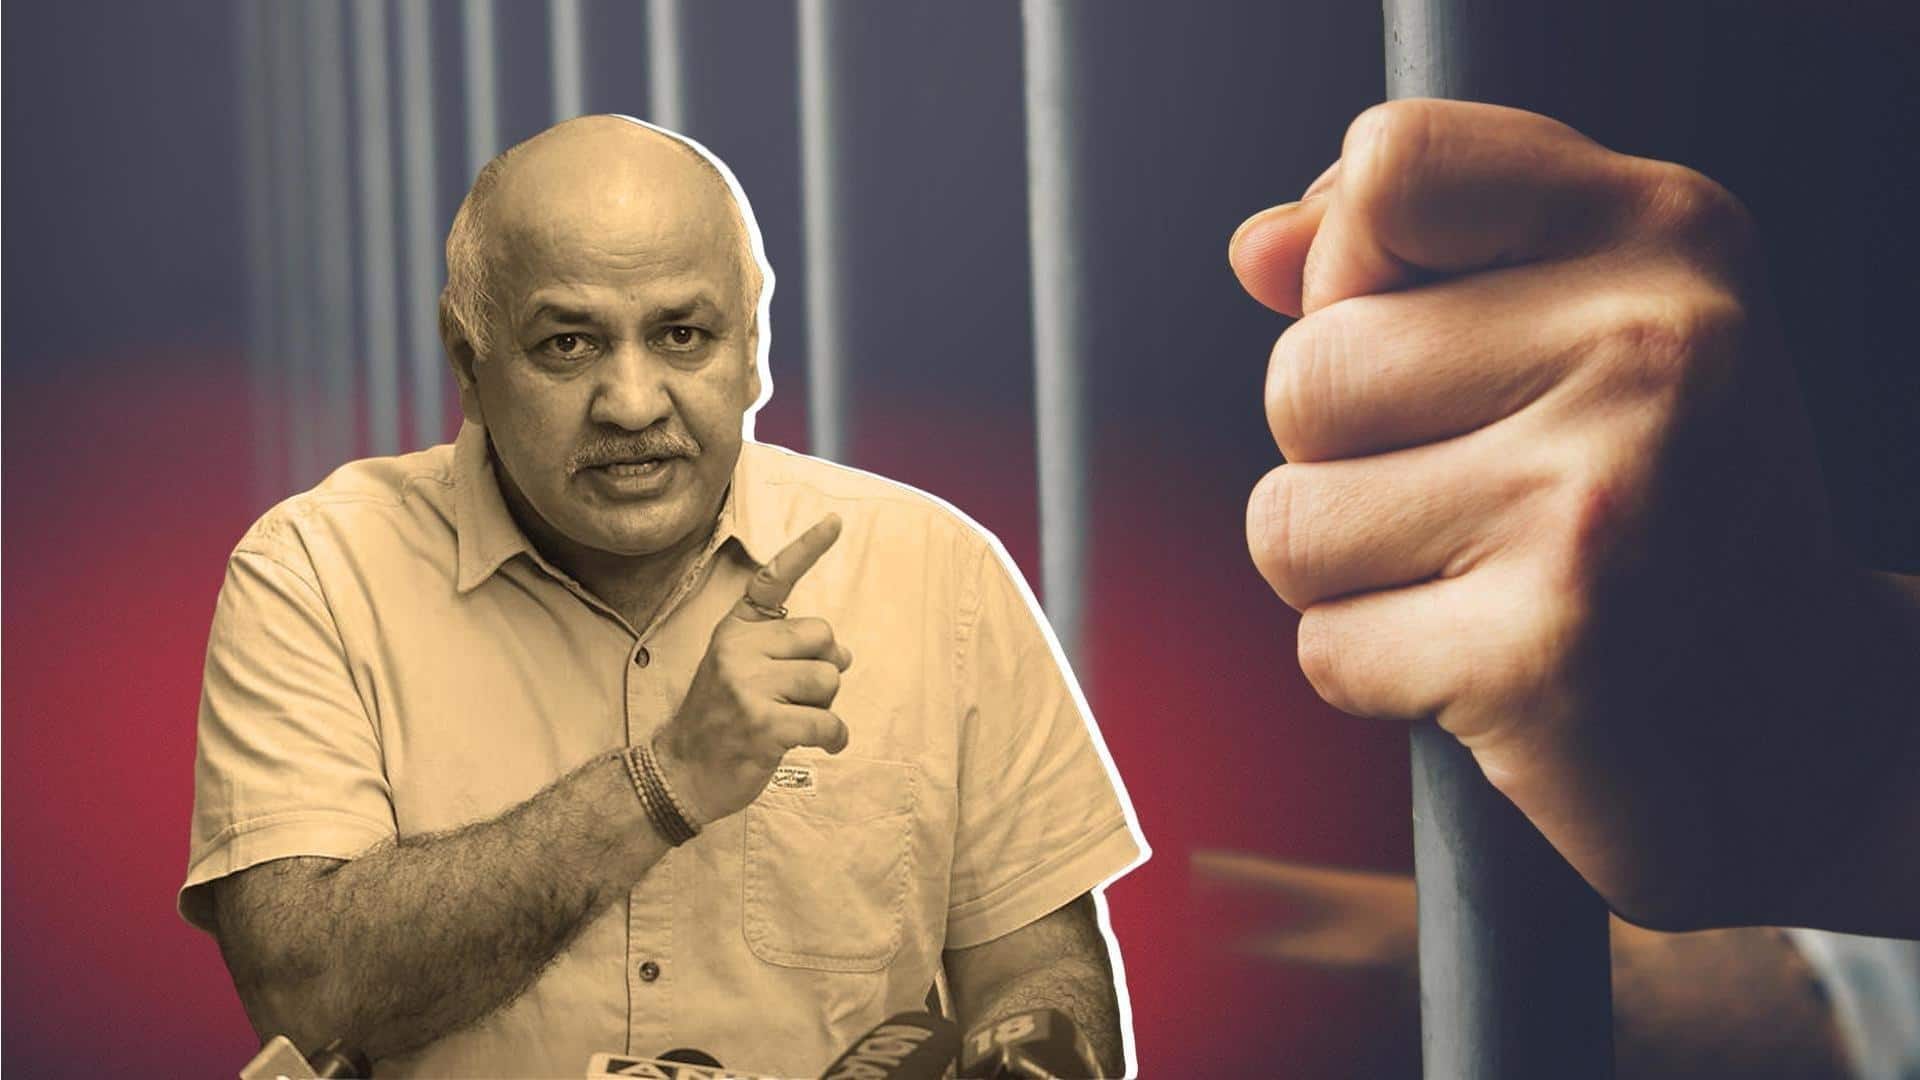 Delhi liqourgate: Manish Sisodia's judicial custody extended till May 12